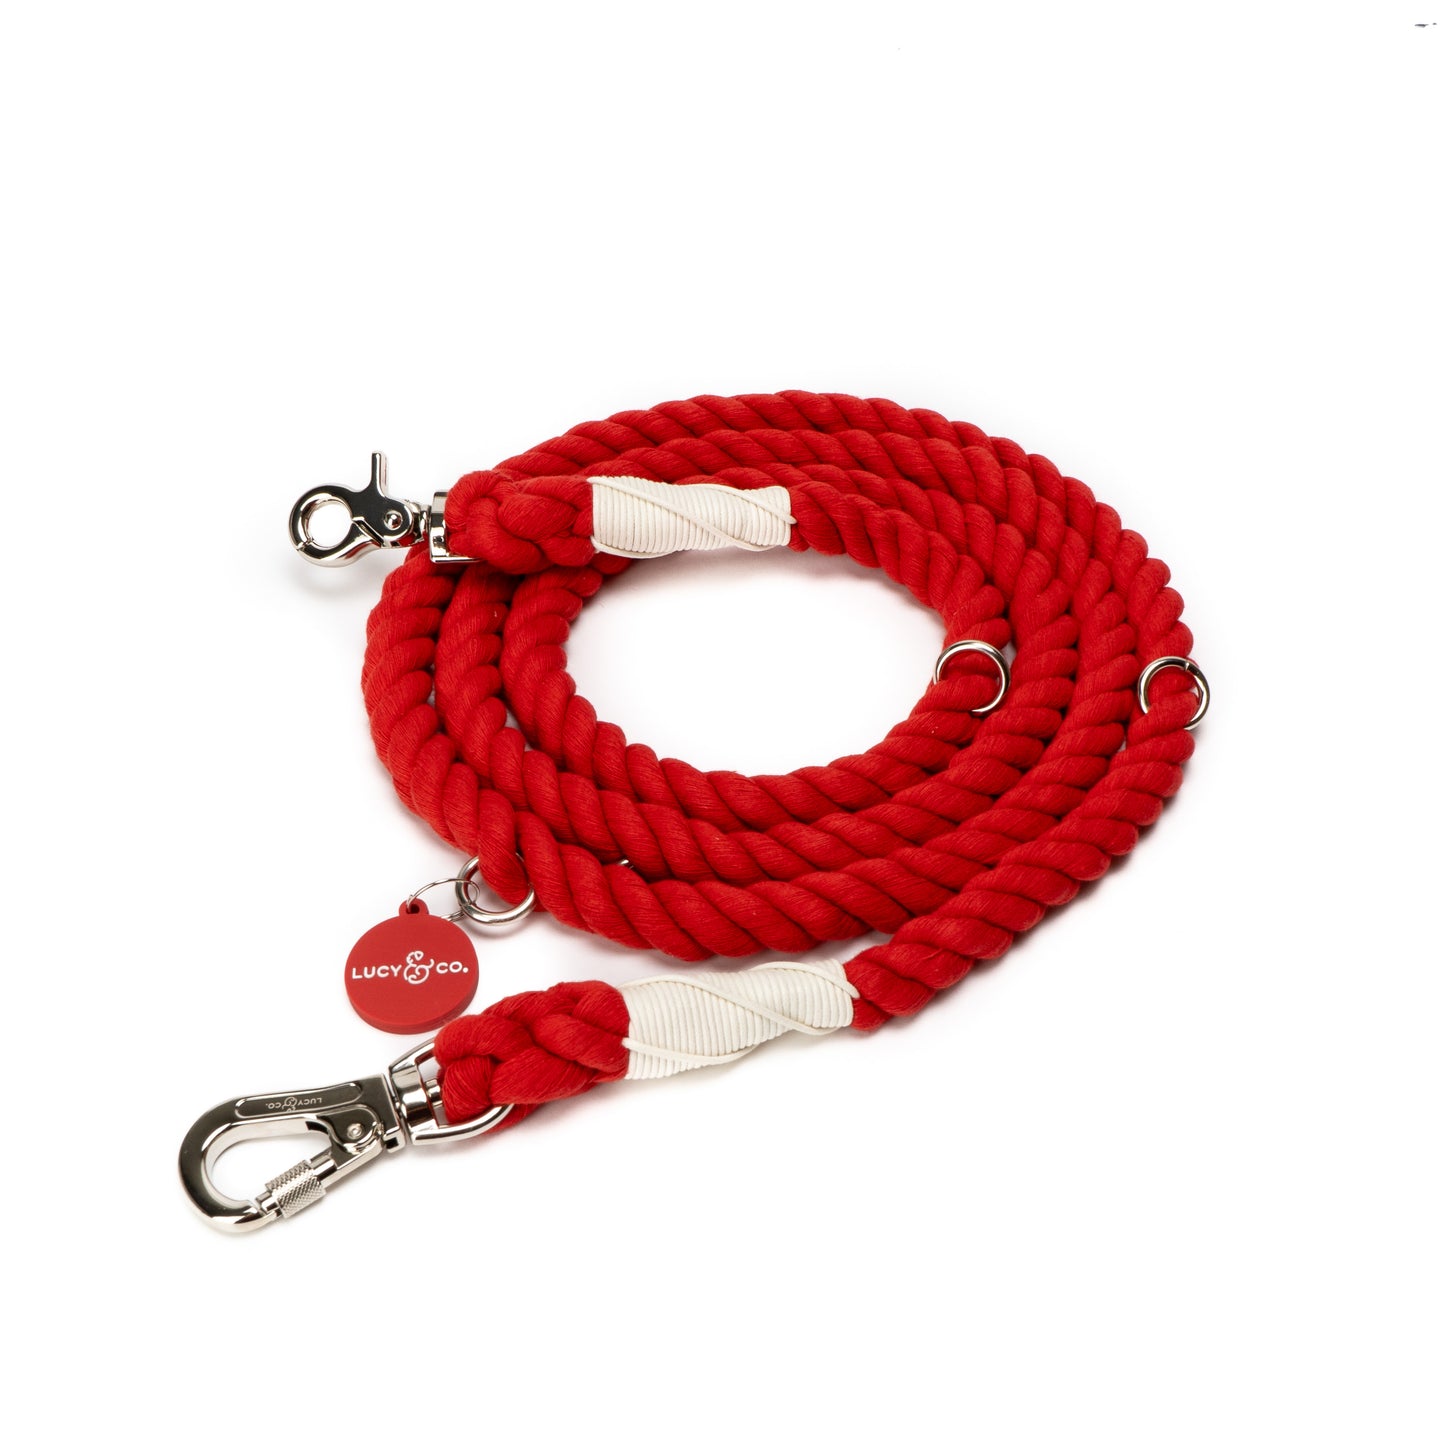 The Crimson Hands-Free Rope Leash